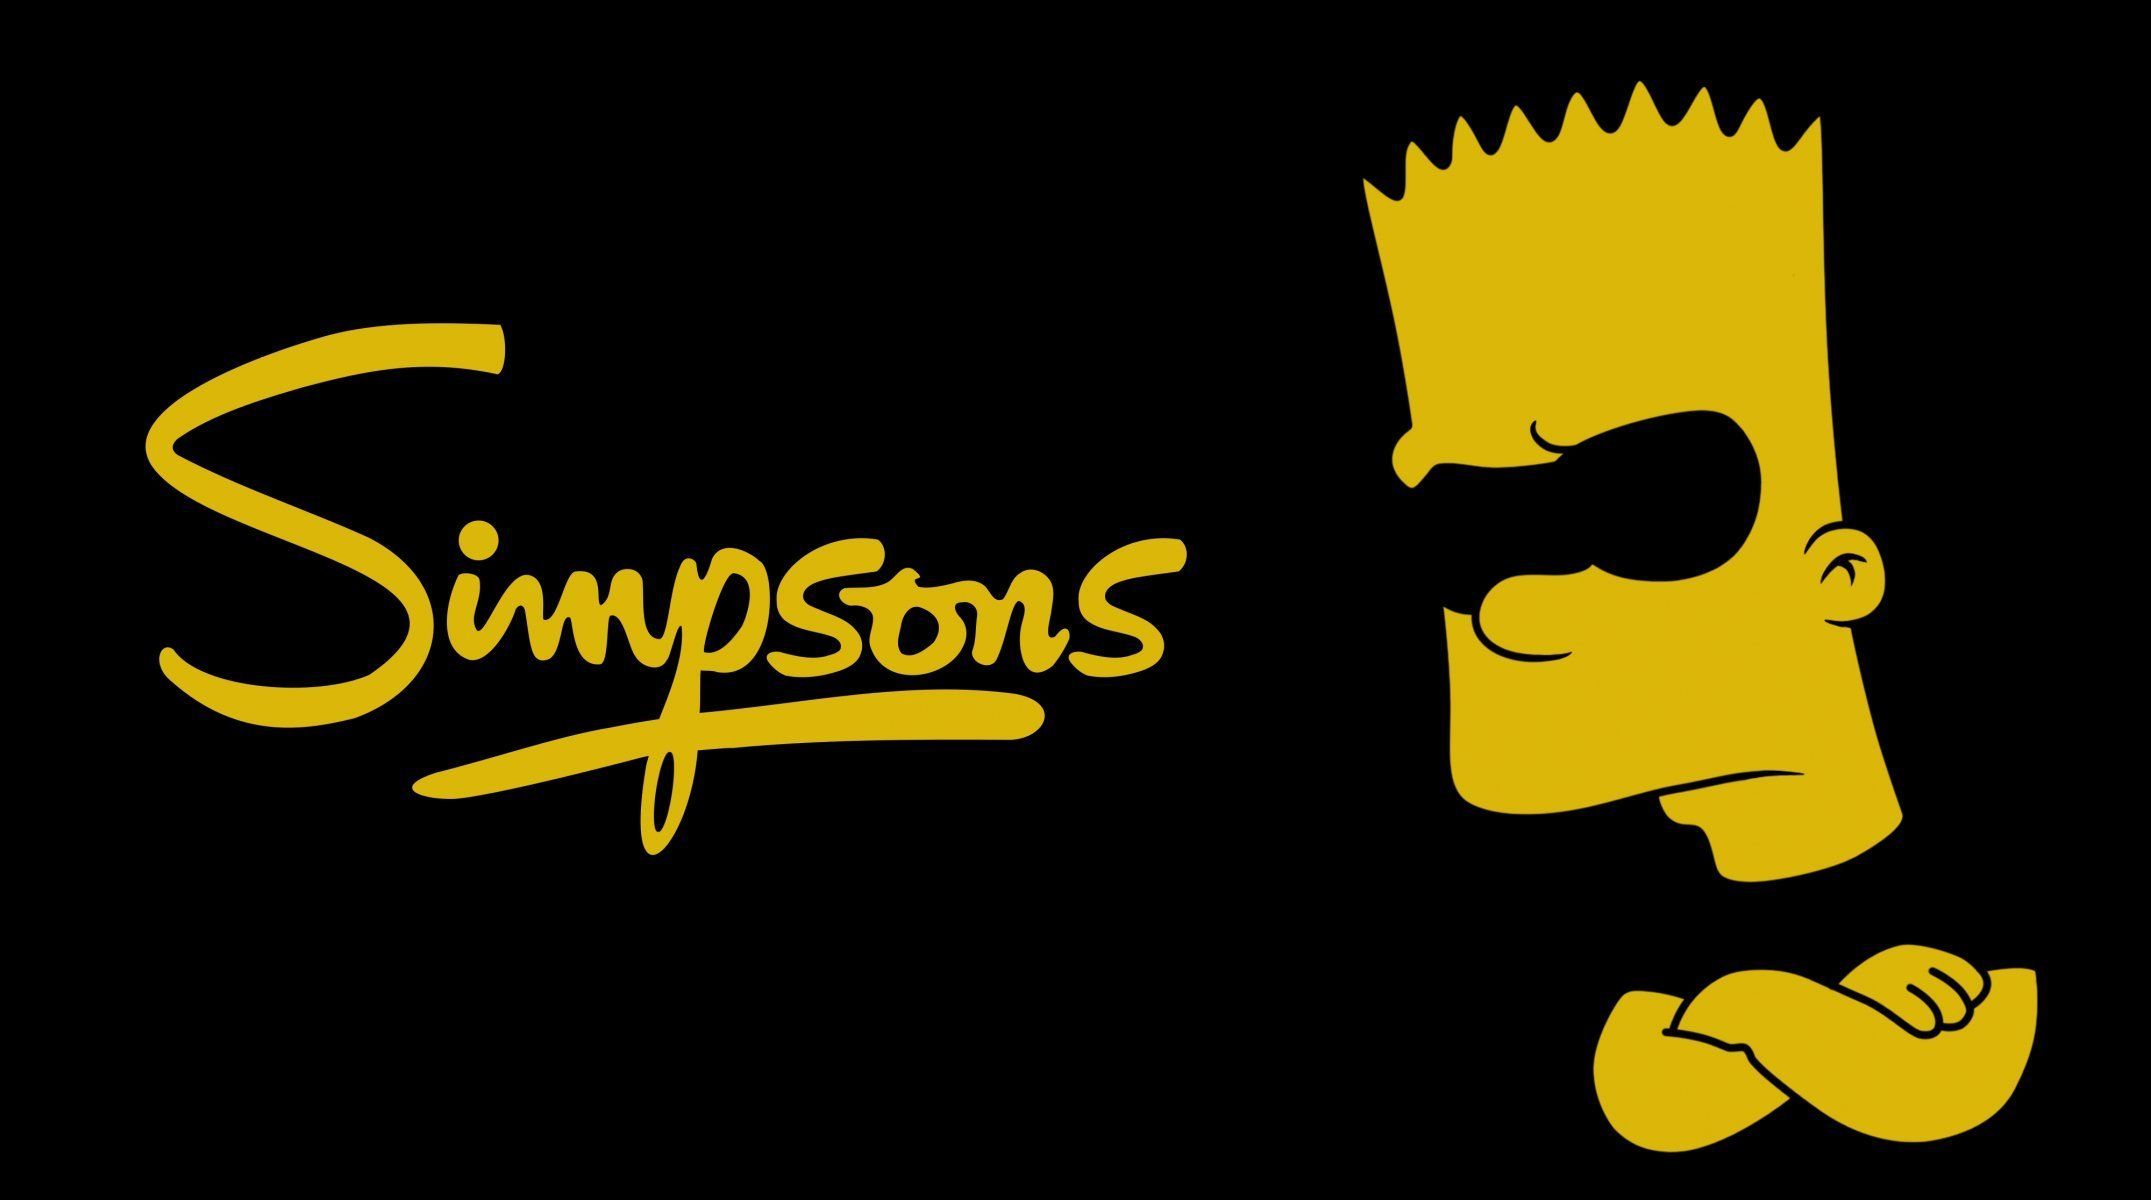 Bart Simpson Nike wallpaper by Roldex09 - Download on ZEDGE™